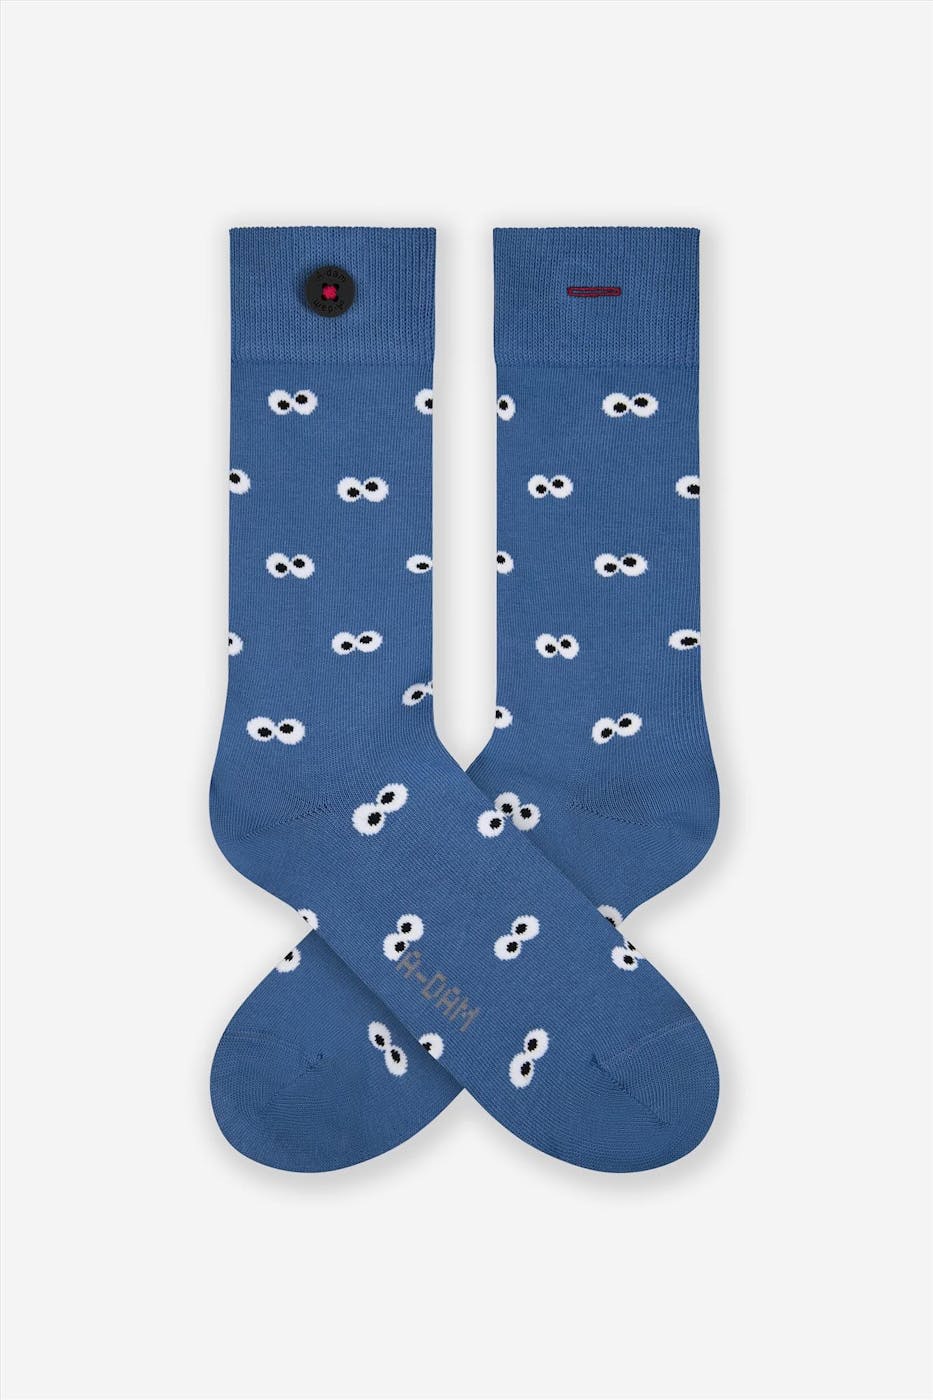 A'dam - Rood-Blauwe Googly Sesame 2-pack sokken, maat: 41-46